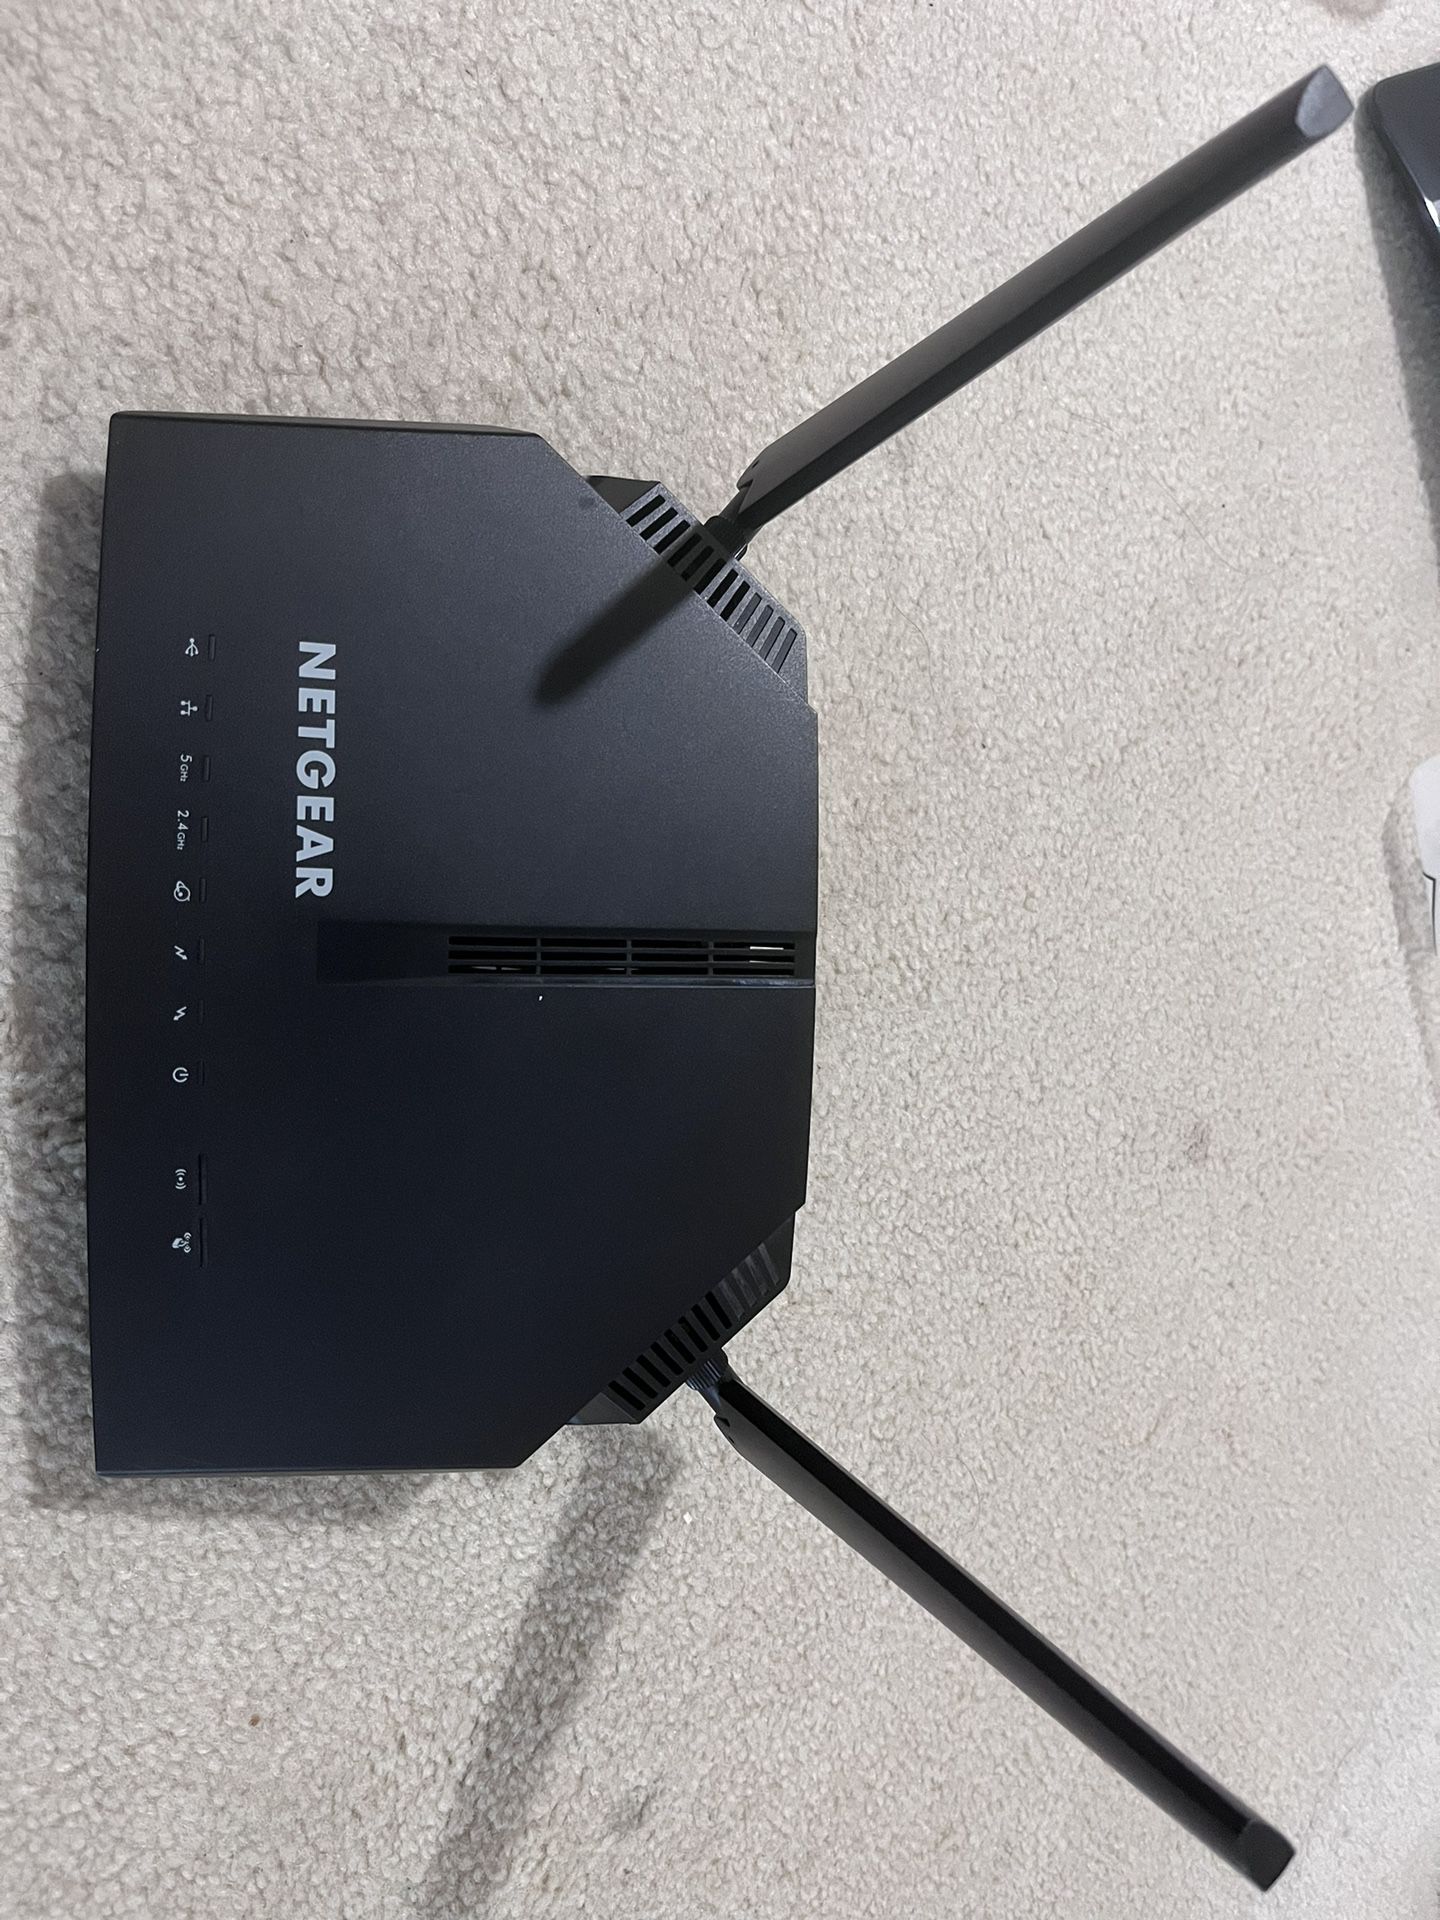 NETGEAR AC1200 WiFi Cable Modem Router, Model: C6220